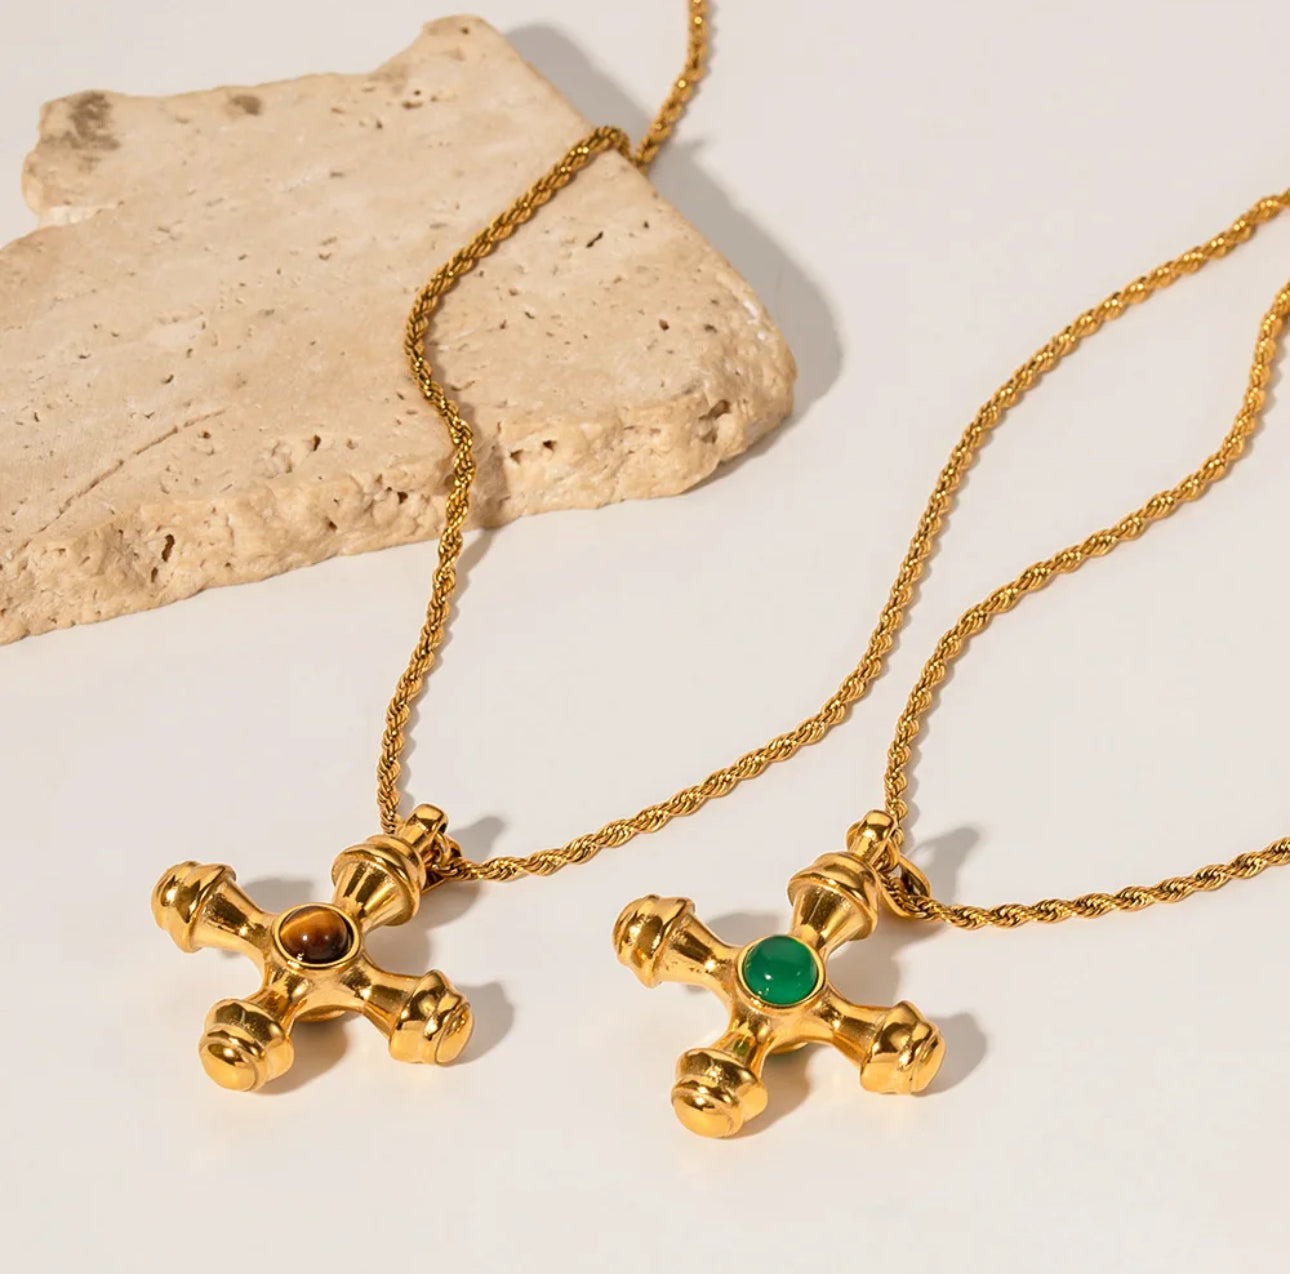 Regal Cross Pendant Necklace - Emerald or Tiger's Eye